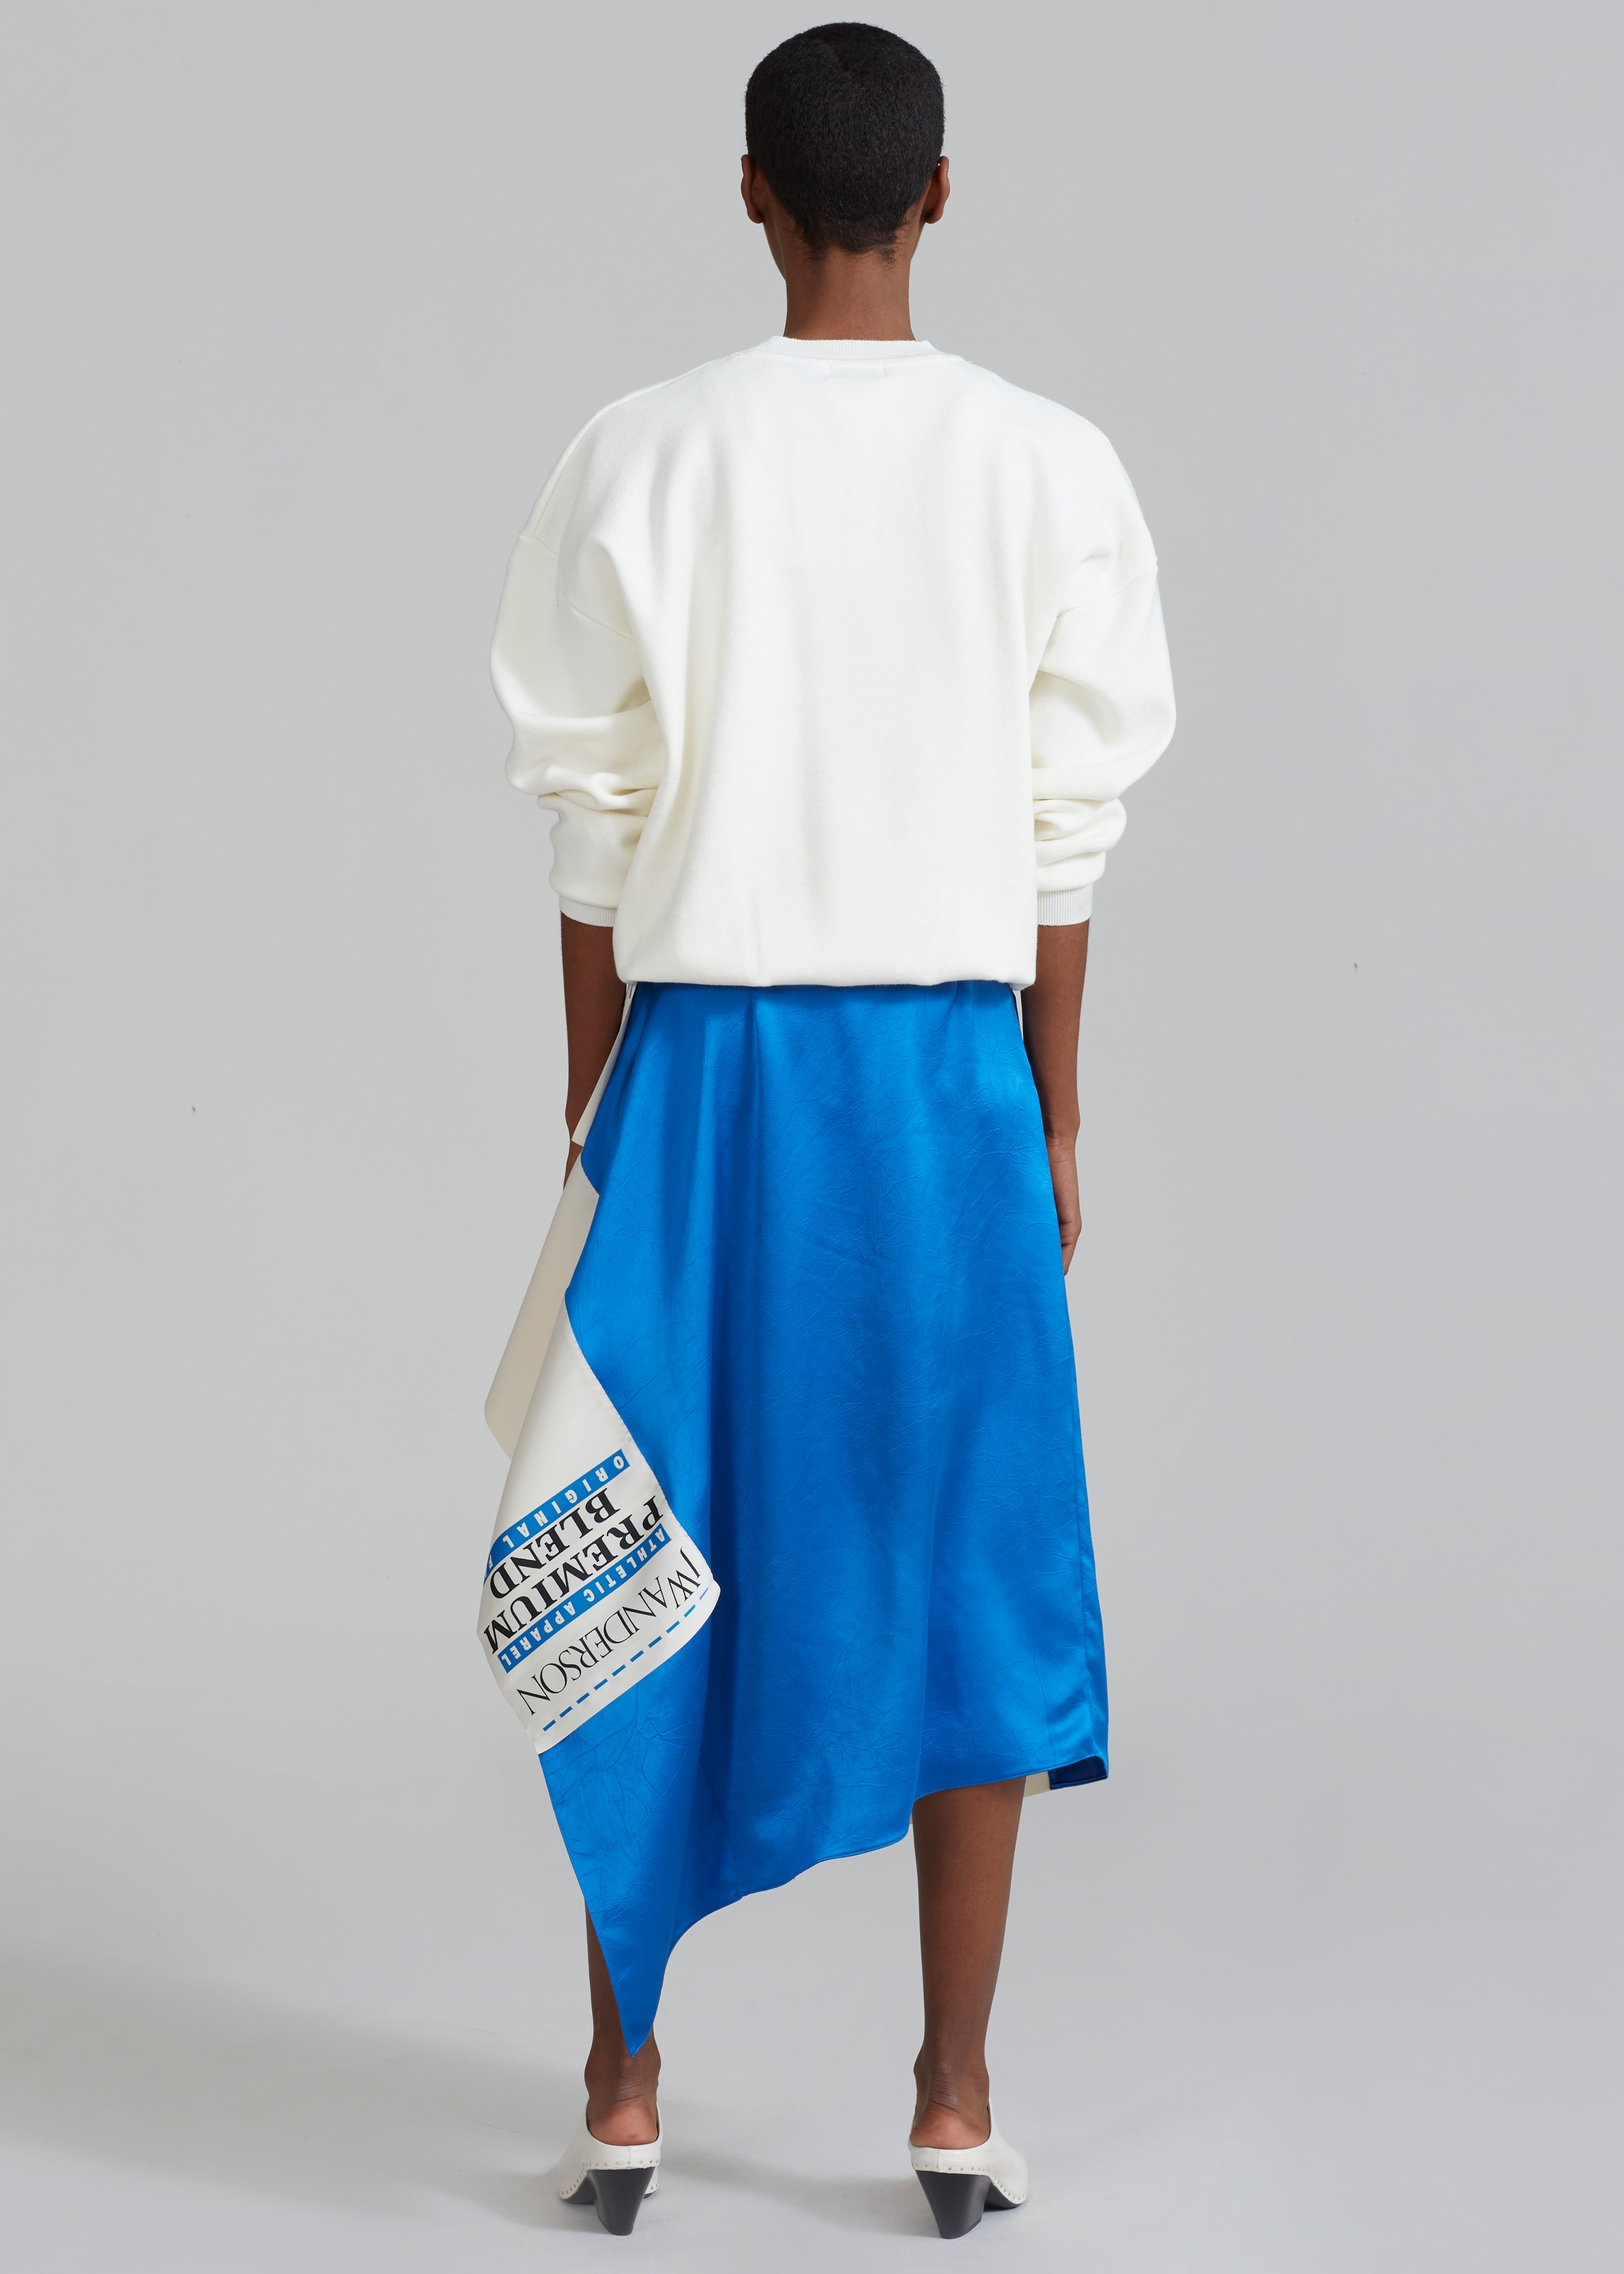 JW Anderson Asymmetric Care Label Skirt - Blue/White - 7